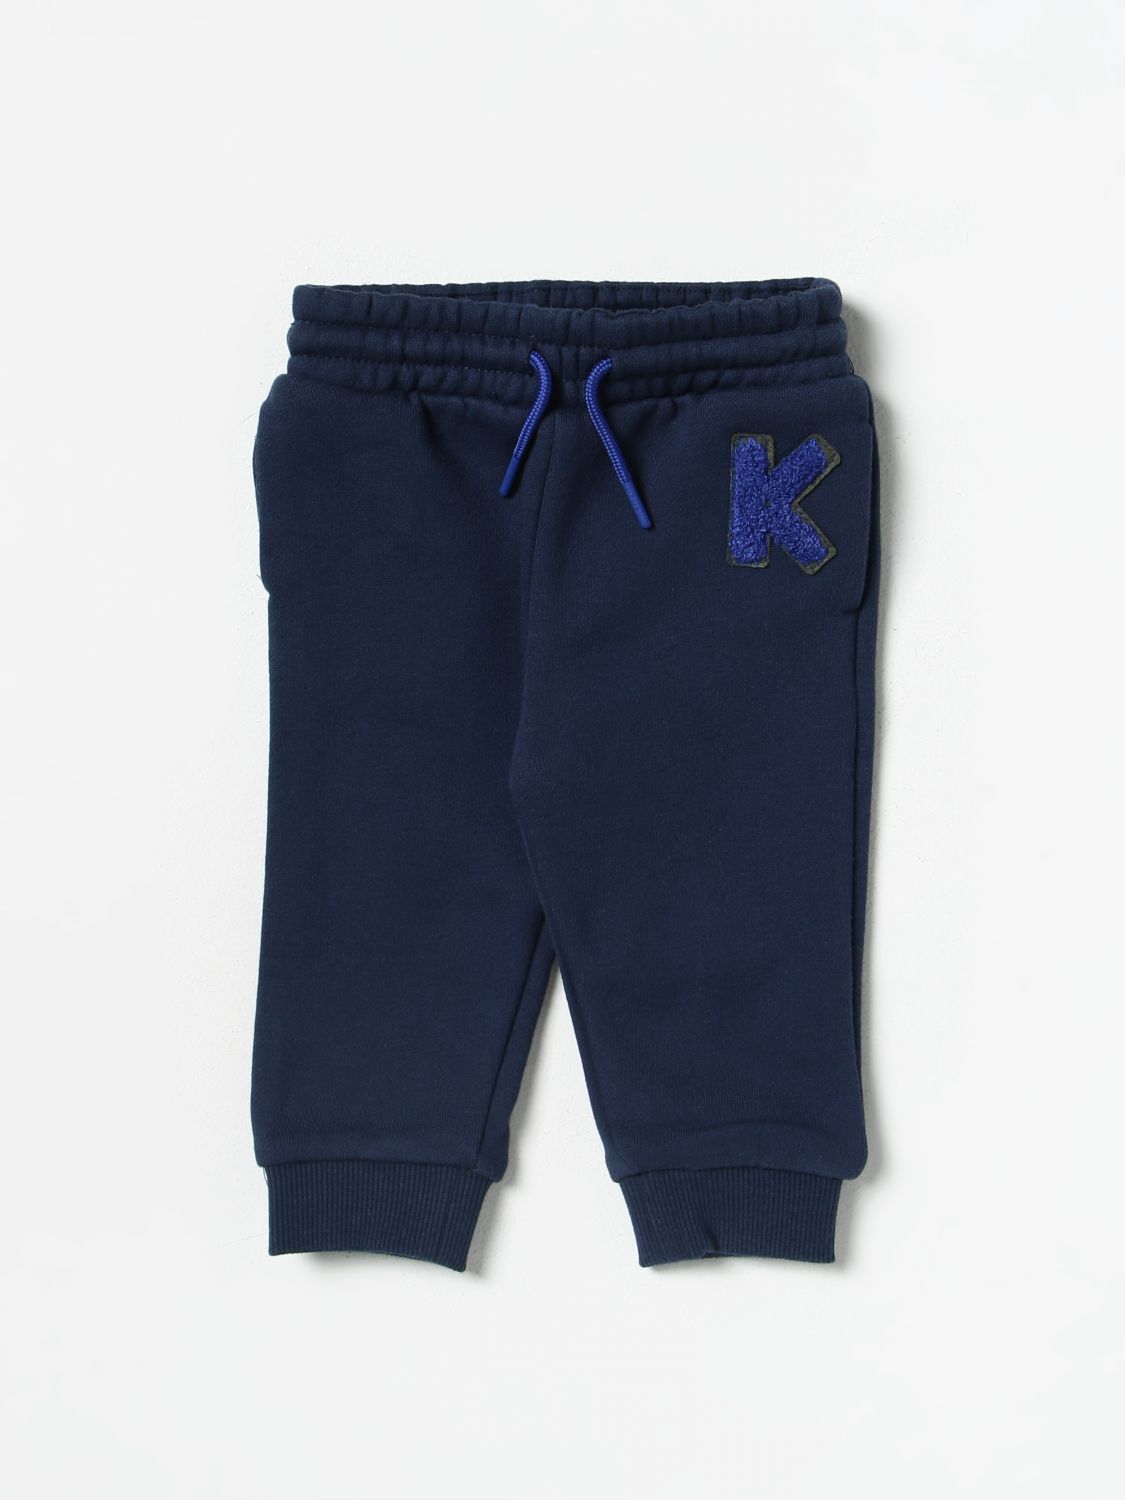 Kenzo Babies' Pants  Kids Kids Color Blue